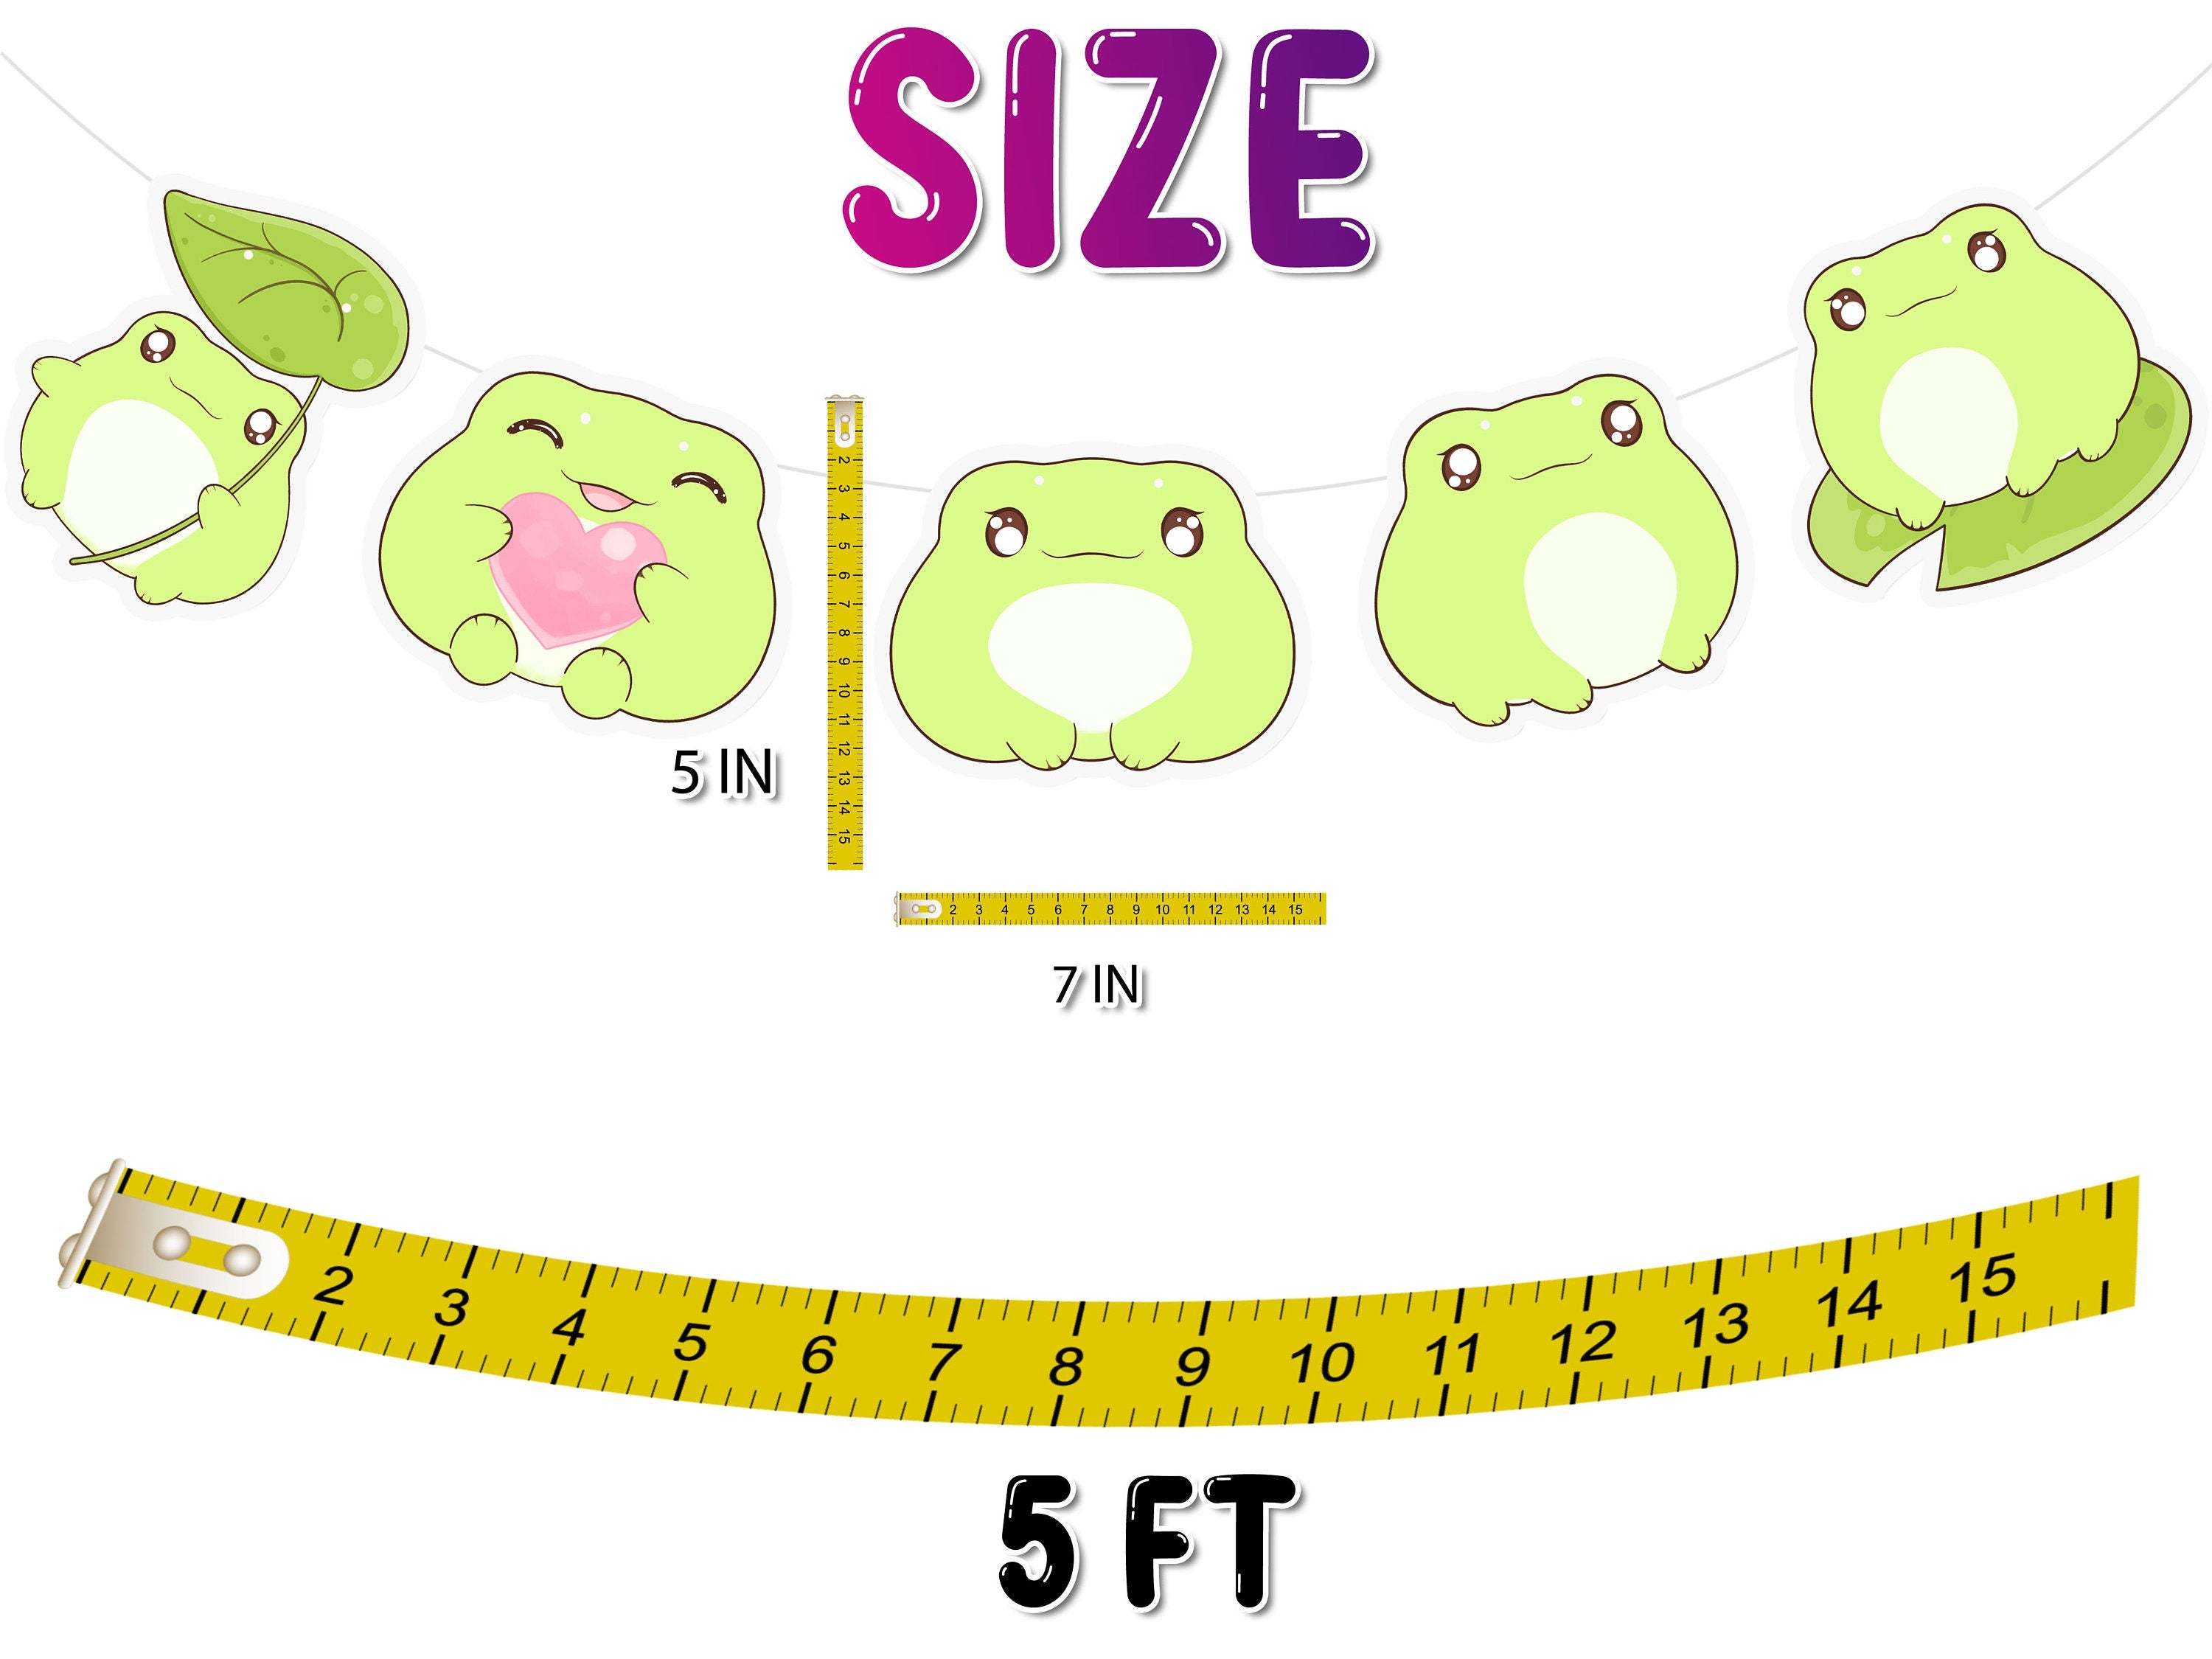 Adorable Kawaii Frog Cartoon Banner for Whimsical Parties and Playful Decor